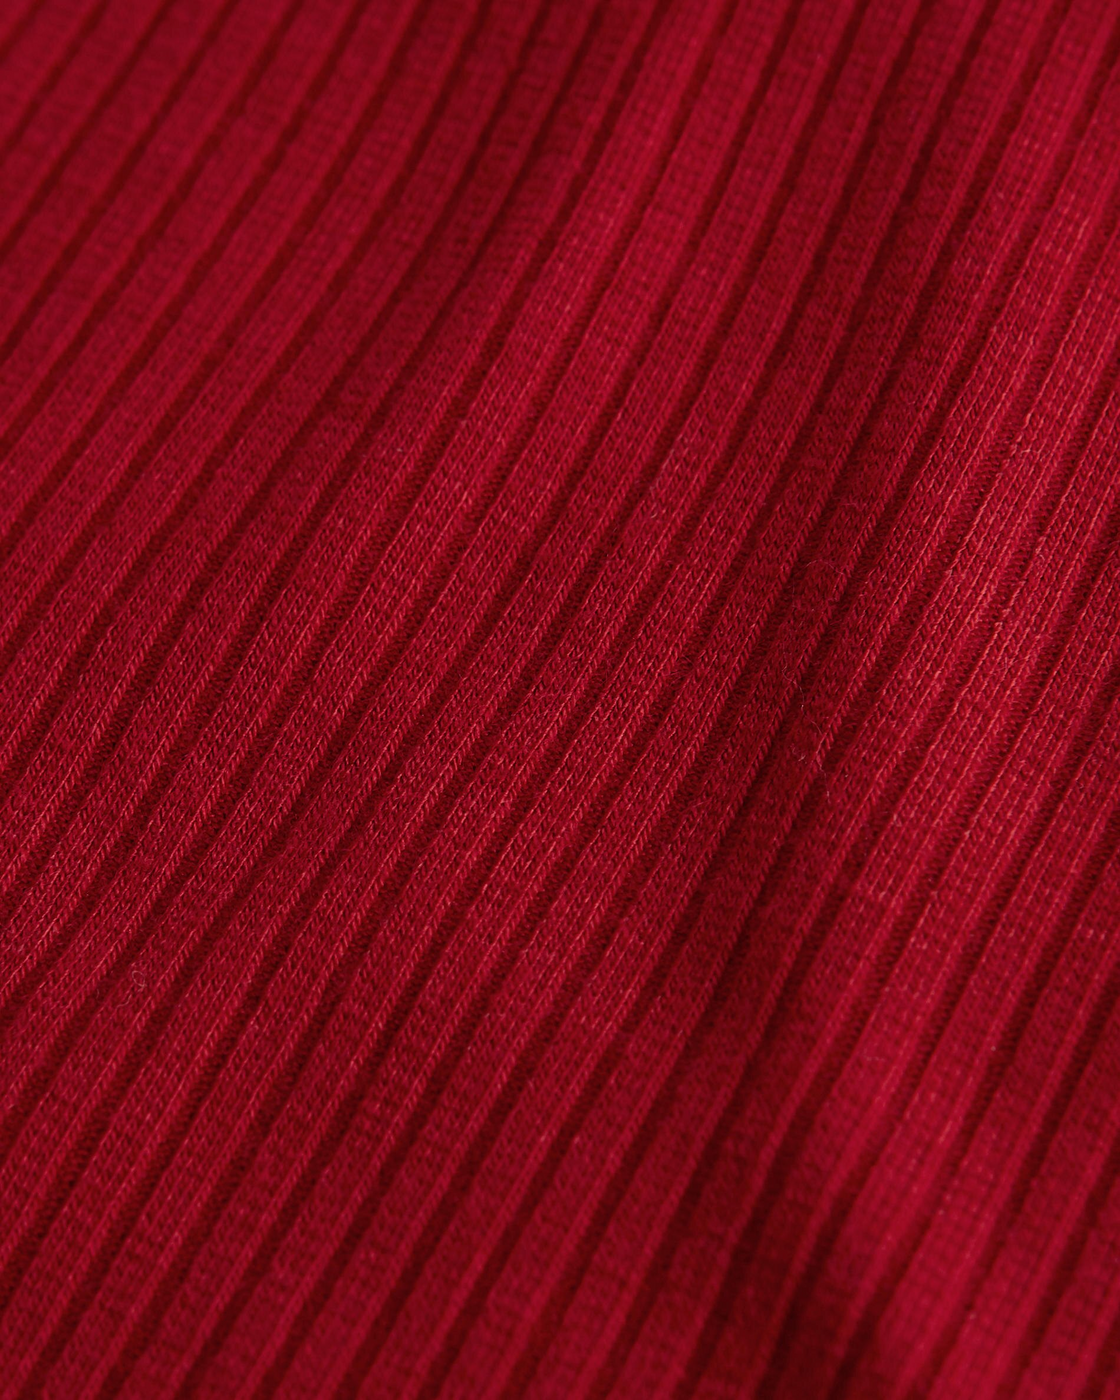 Красная футболка - женская футболка Hollister